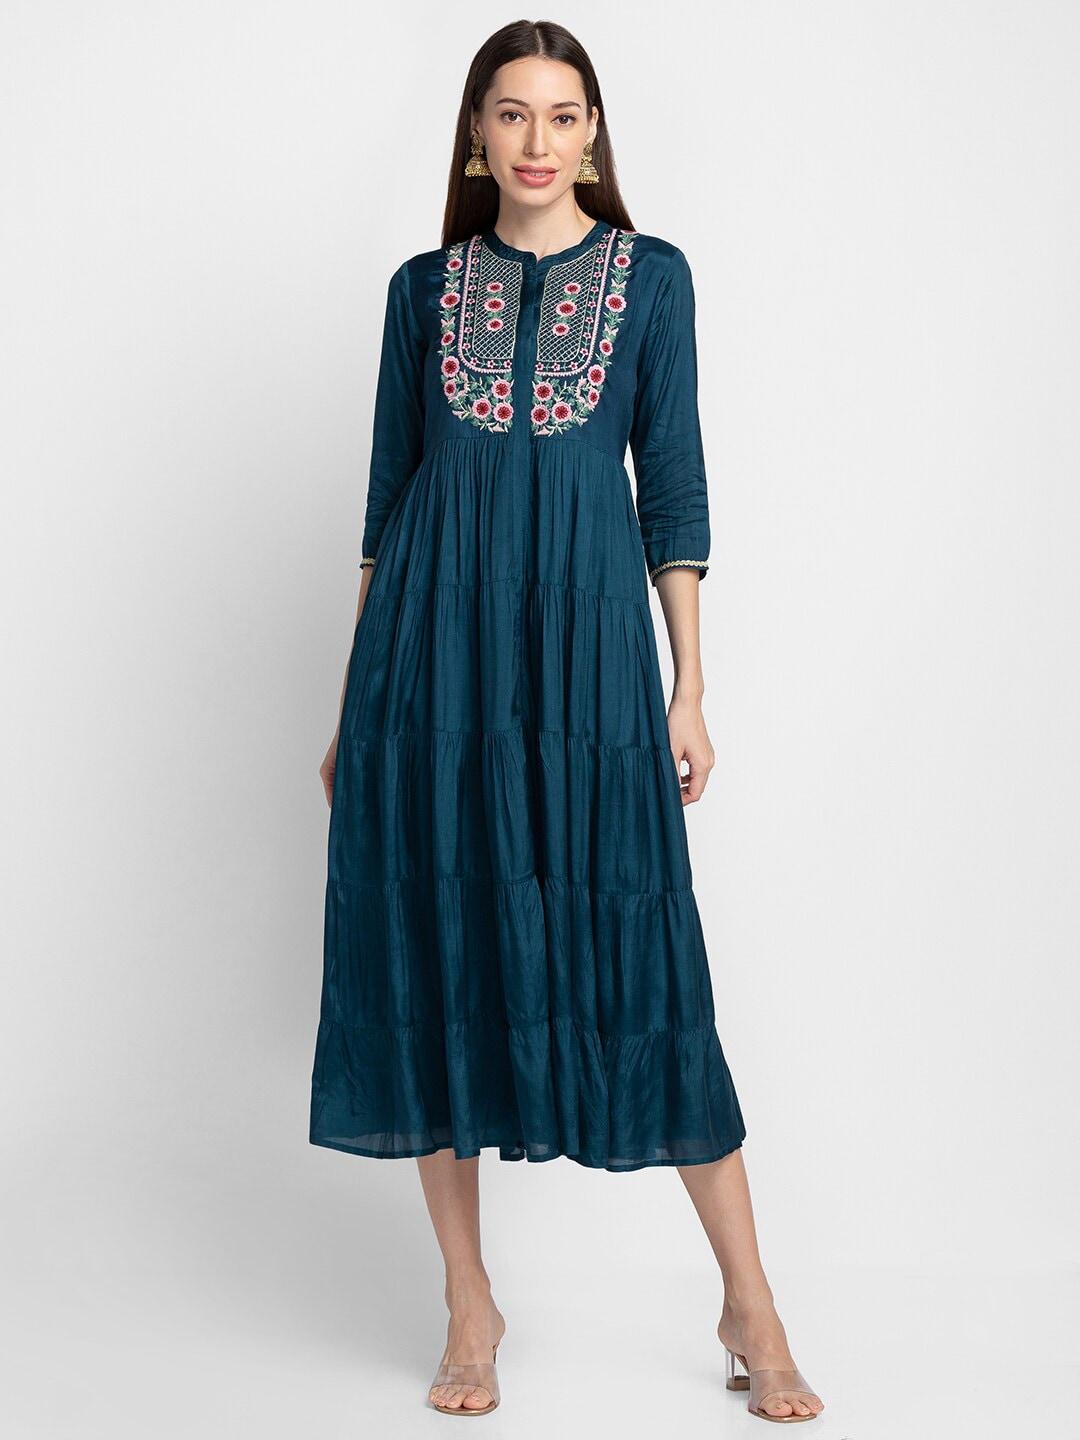 Globus Teal Embroidered Ethnic A-Line Midi Dress